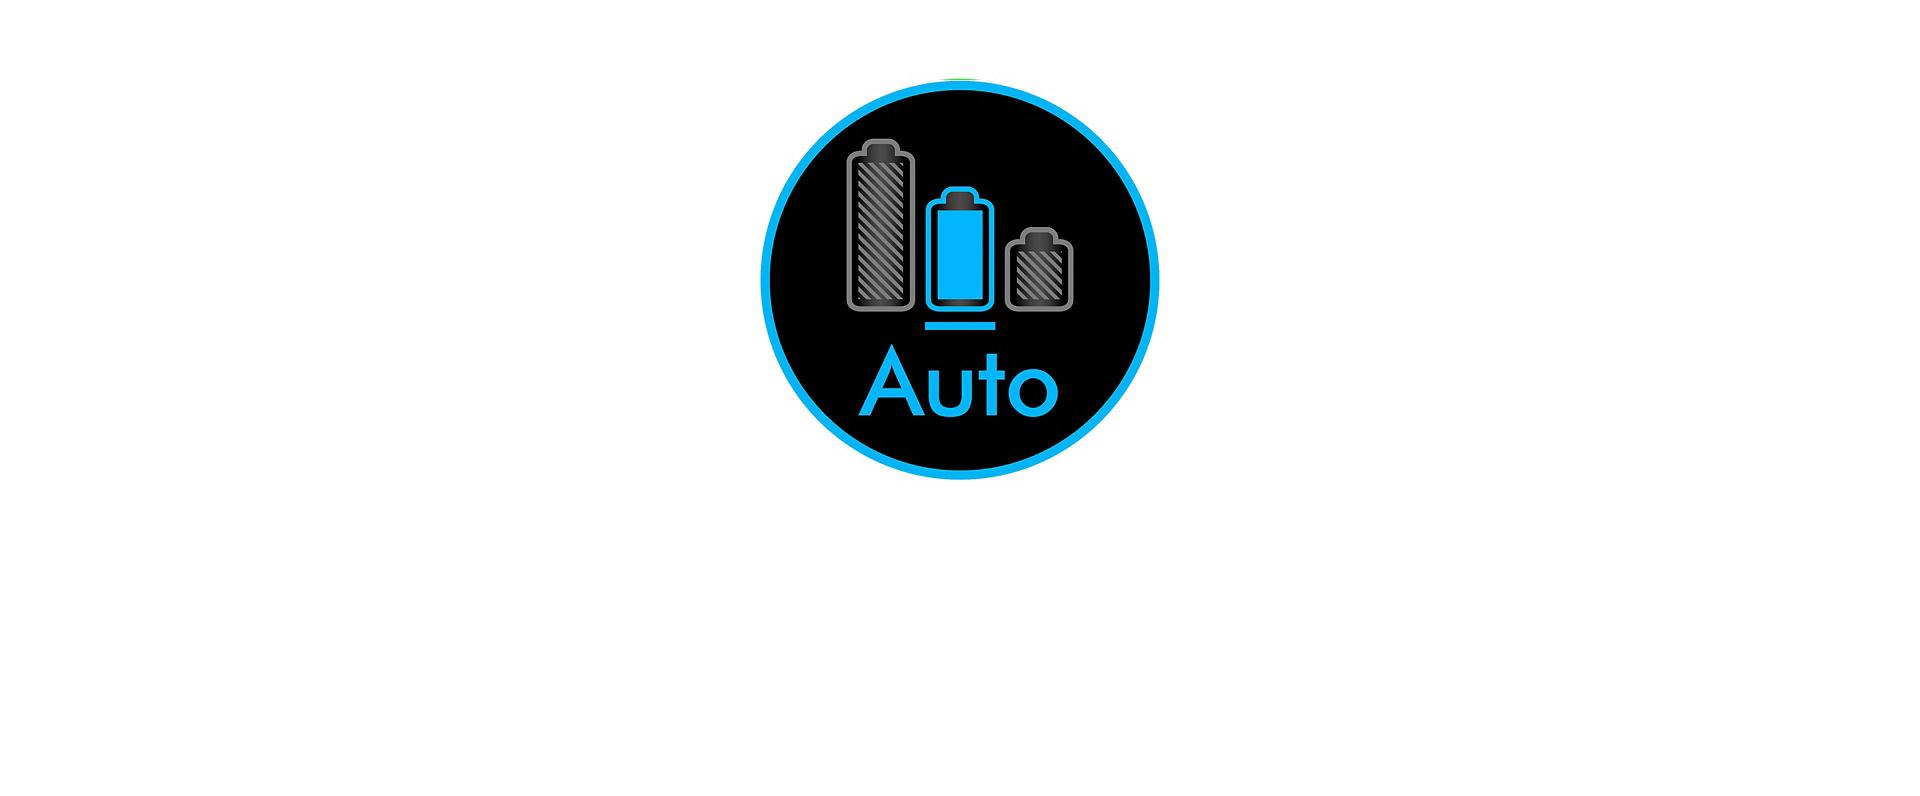 The blue Auto mode indicator